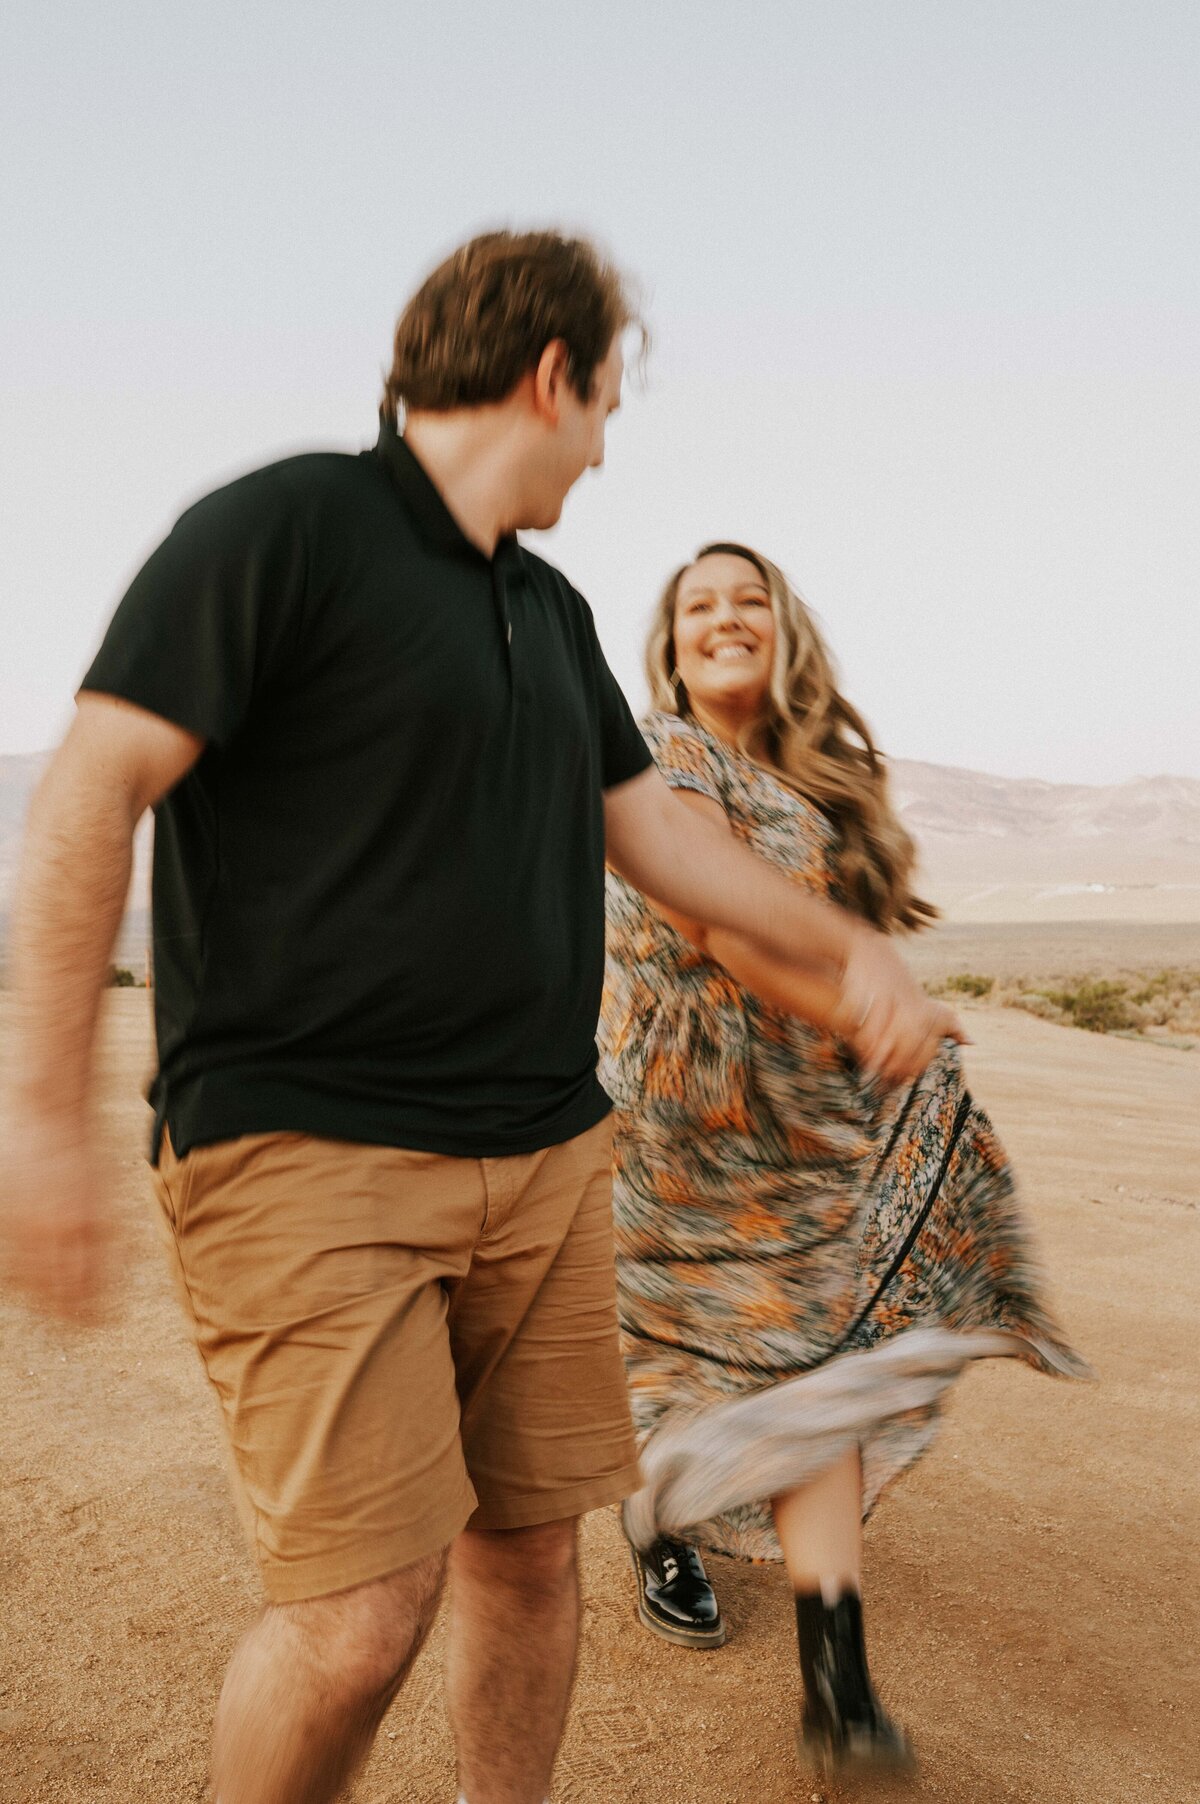 Engagement Photos in Nevada Desert. Arizona photographer